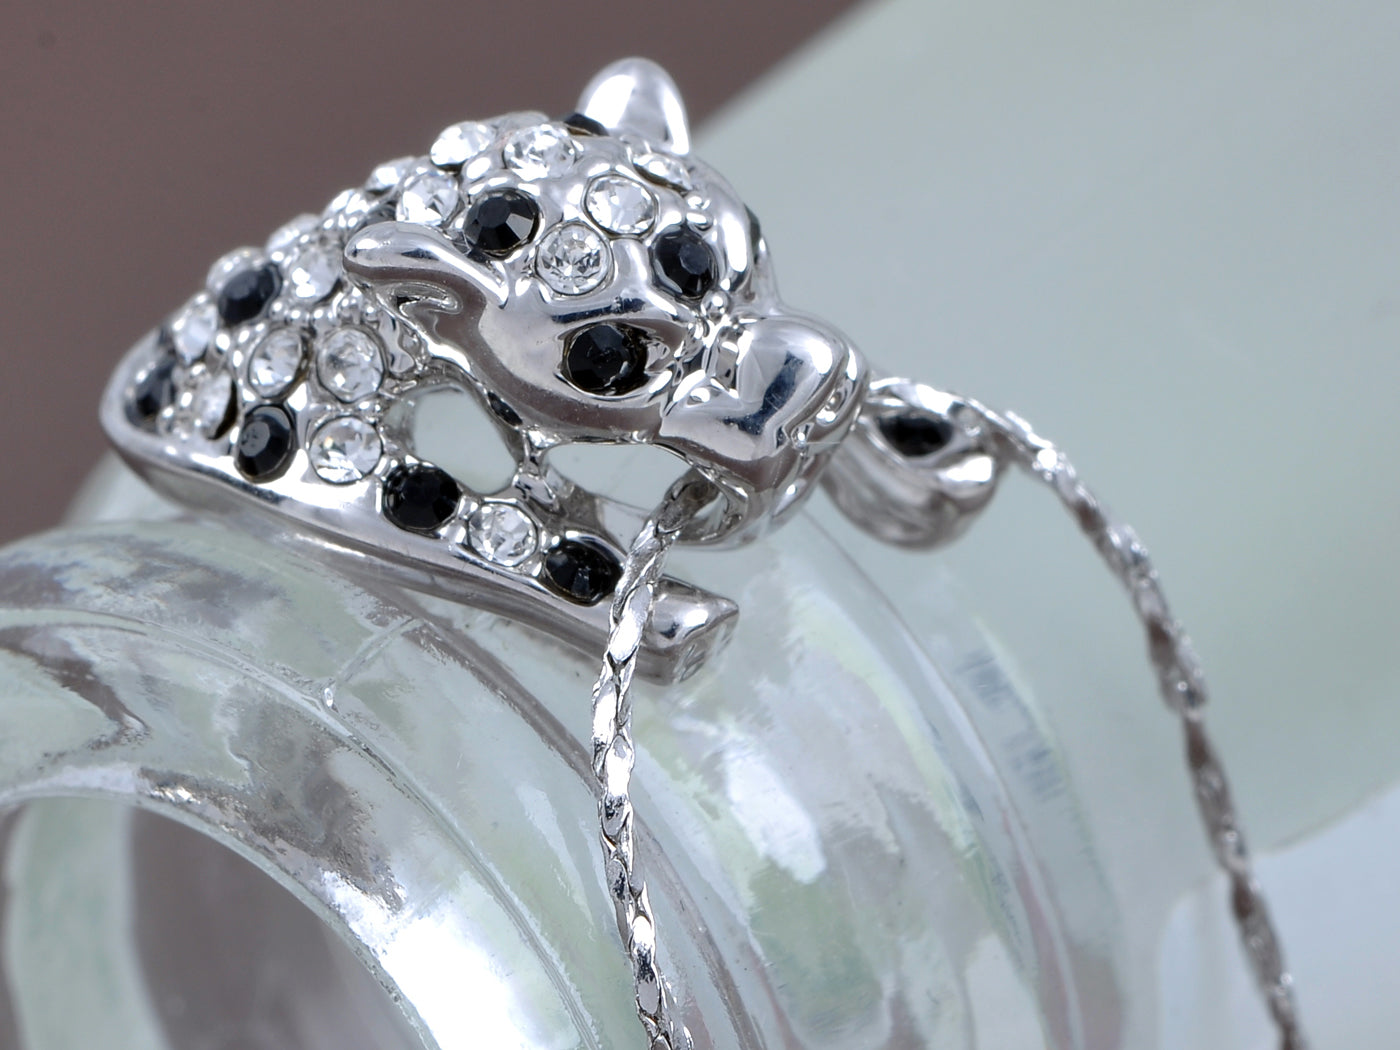 Swarovski Crystal Black And Spots Hanging On Leopard Pendant Necklace